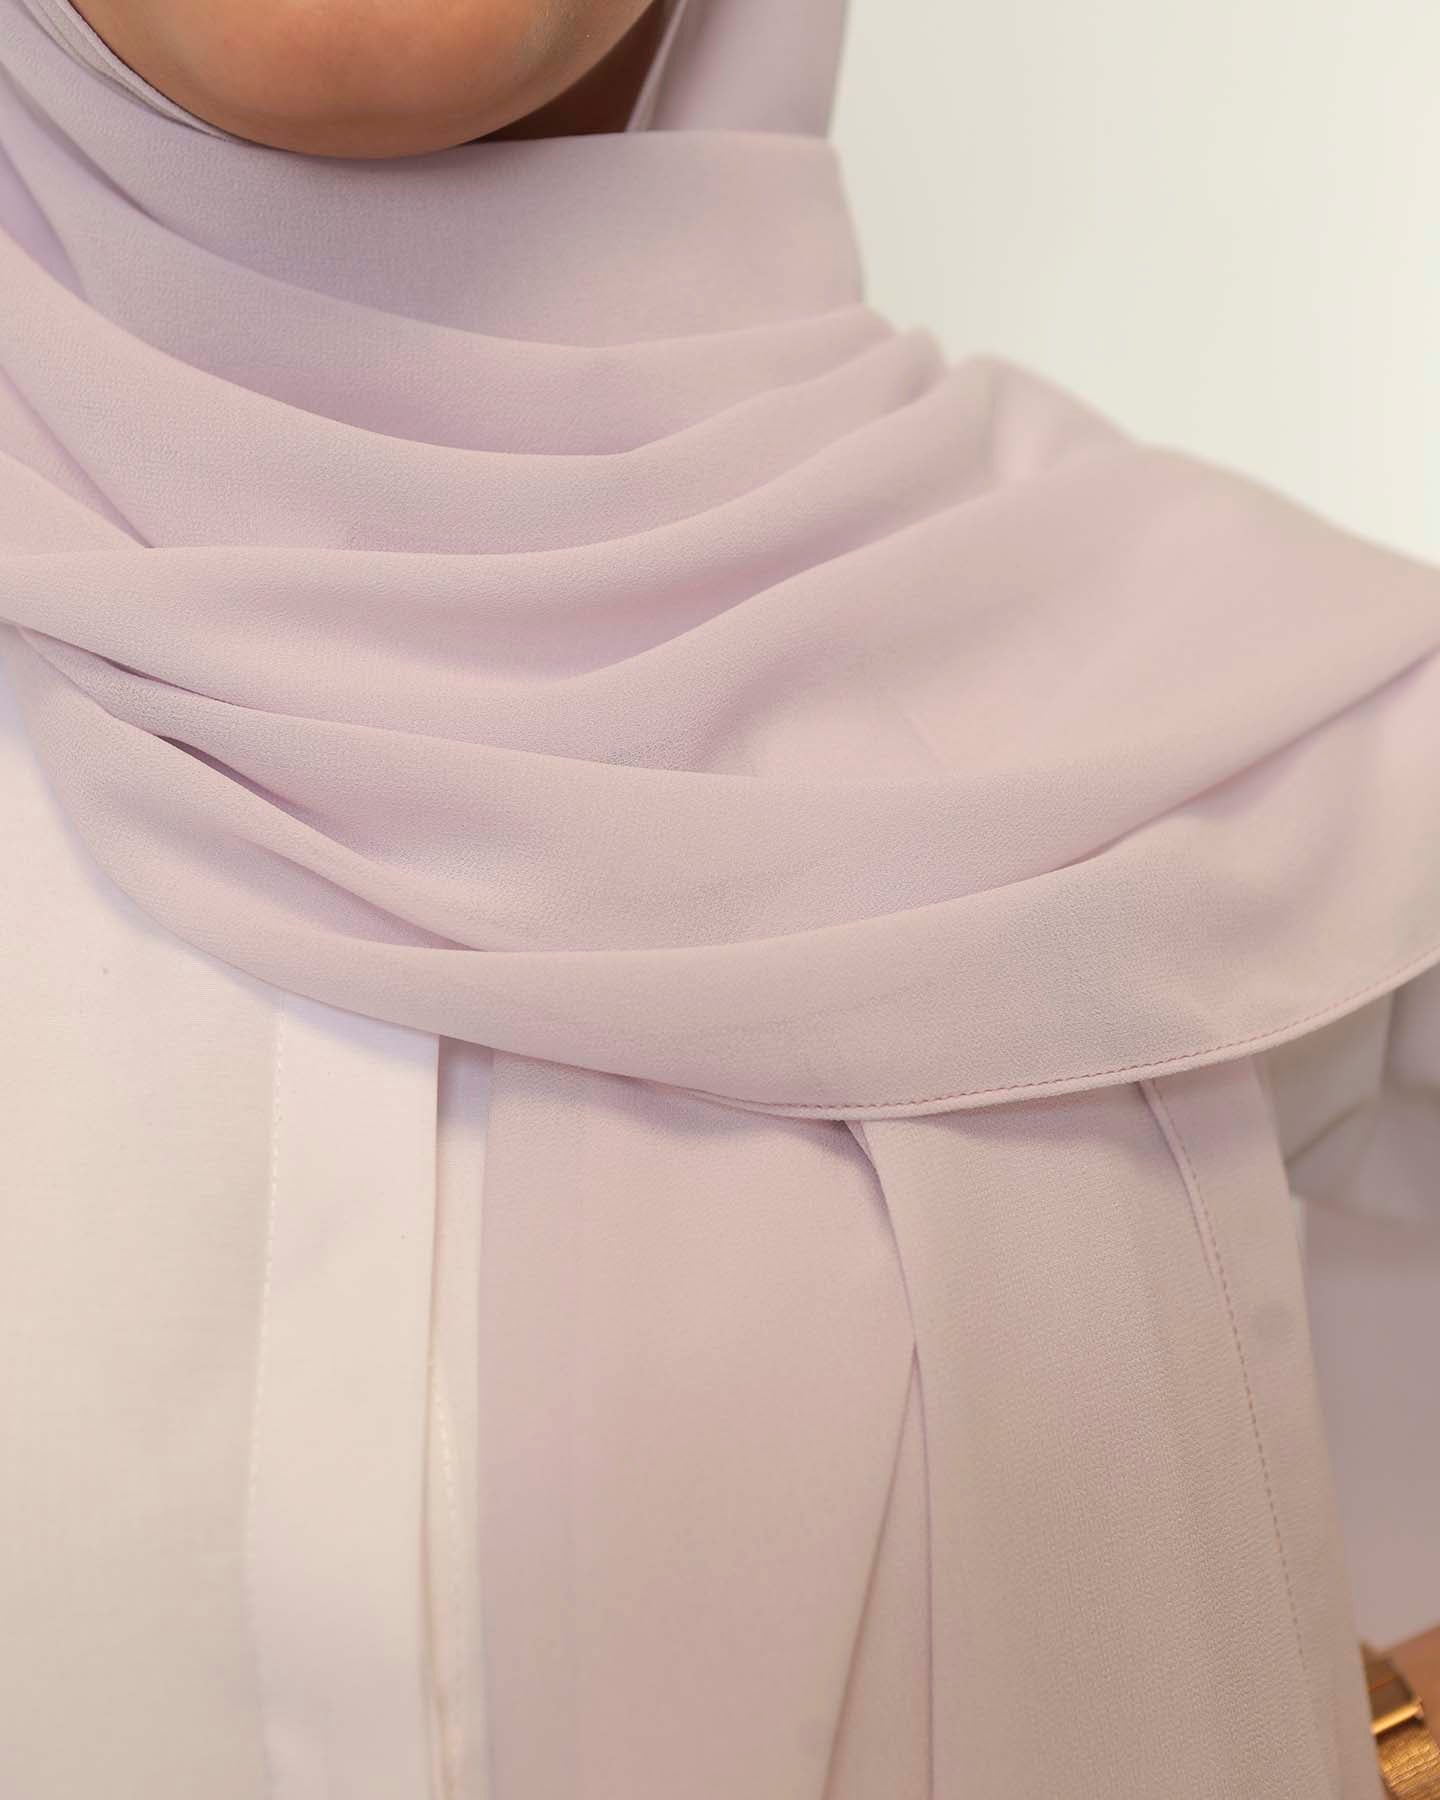 Premium Chiffon Hijab - Light Purple